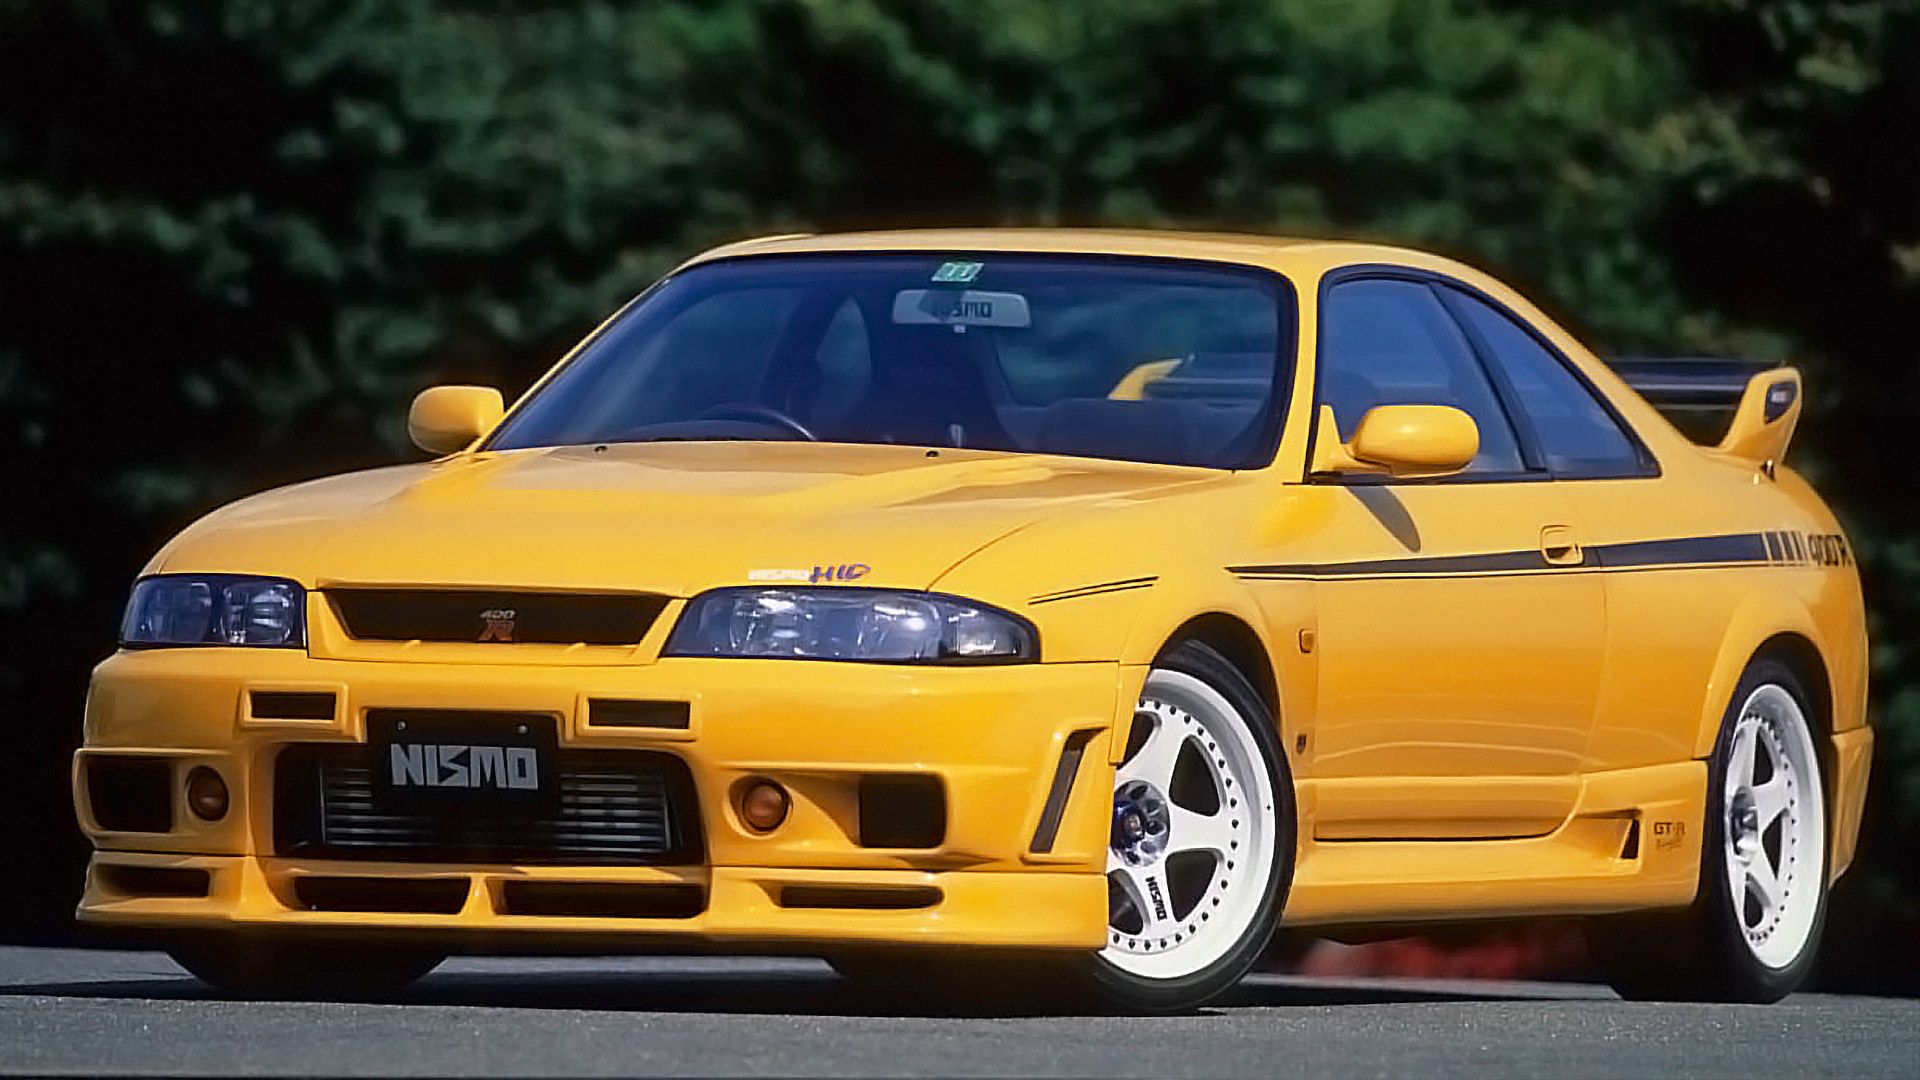 1997 Nissan Skyline GT-R NISMO 400R R33 Parked